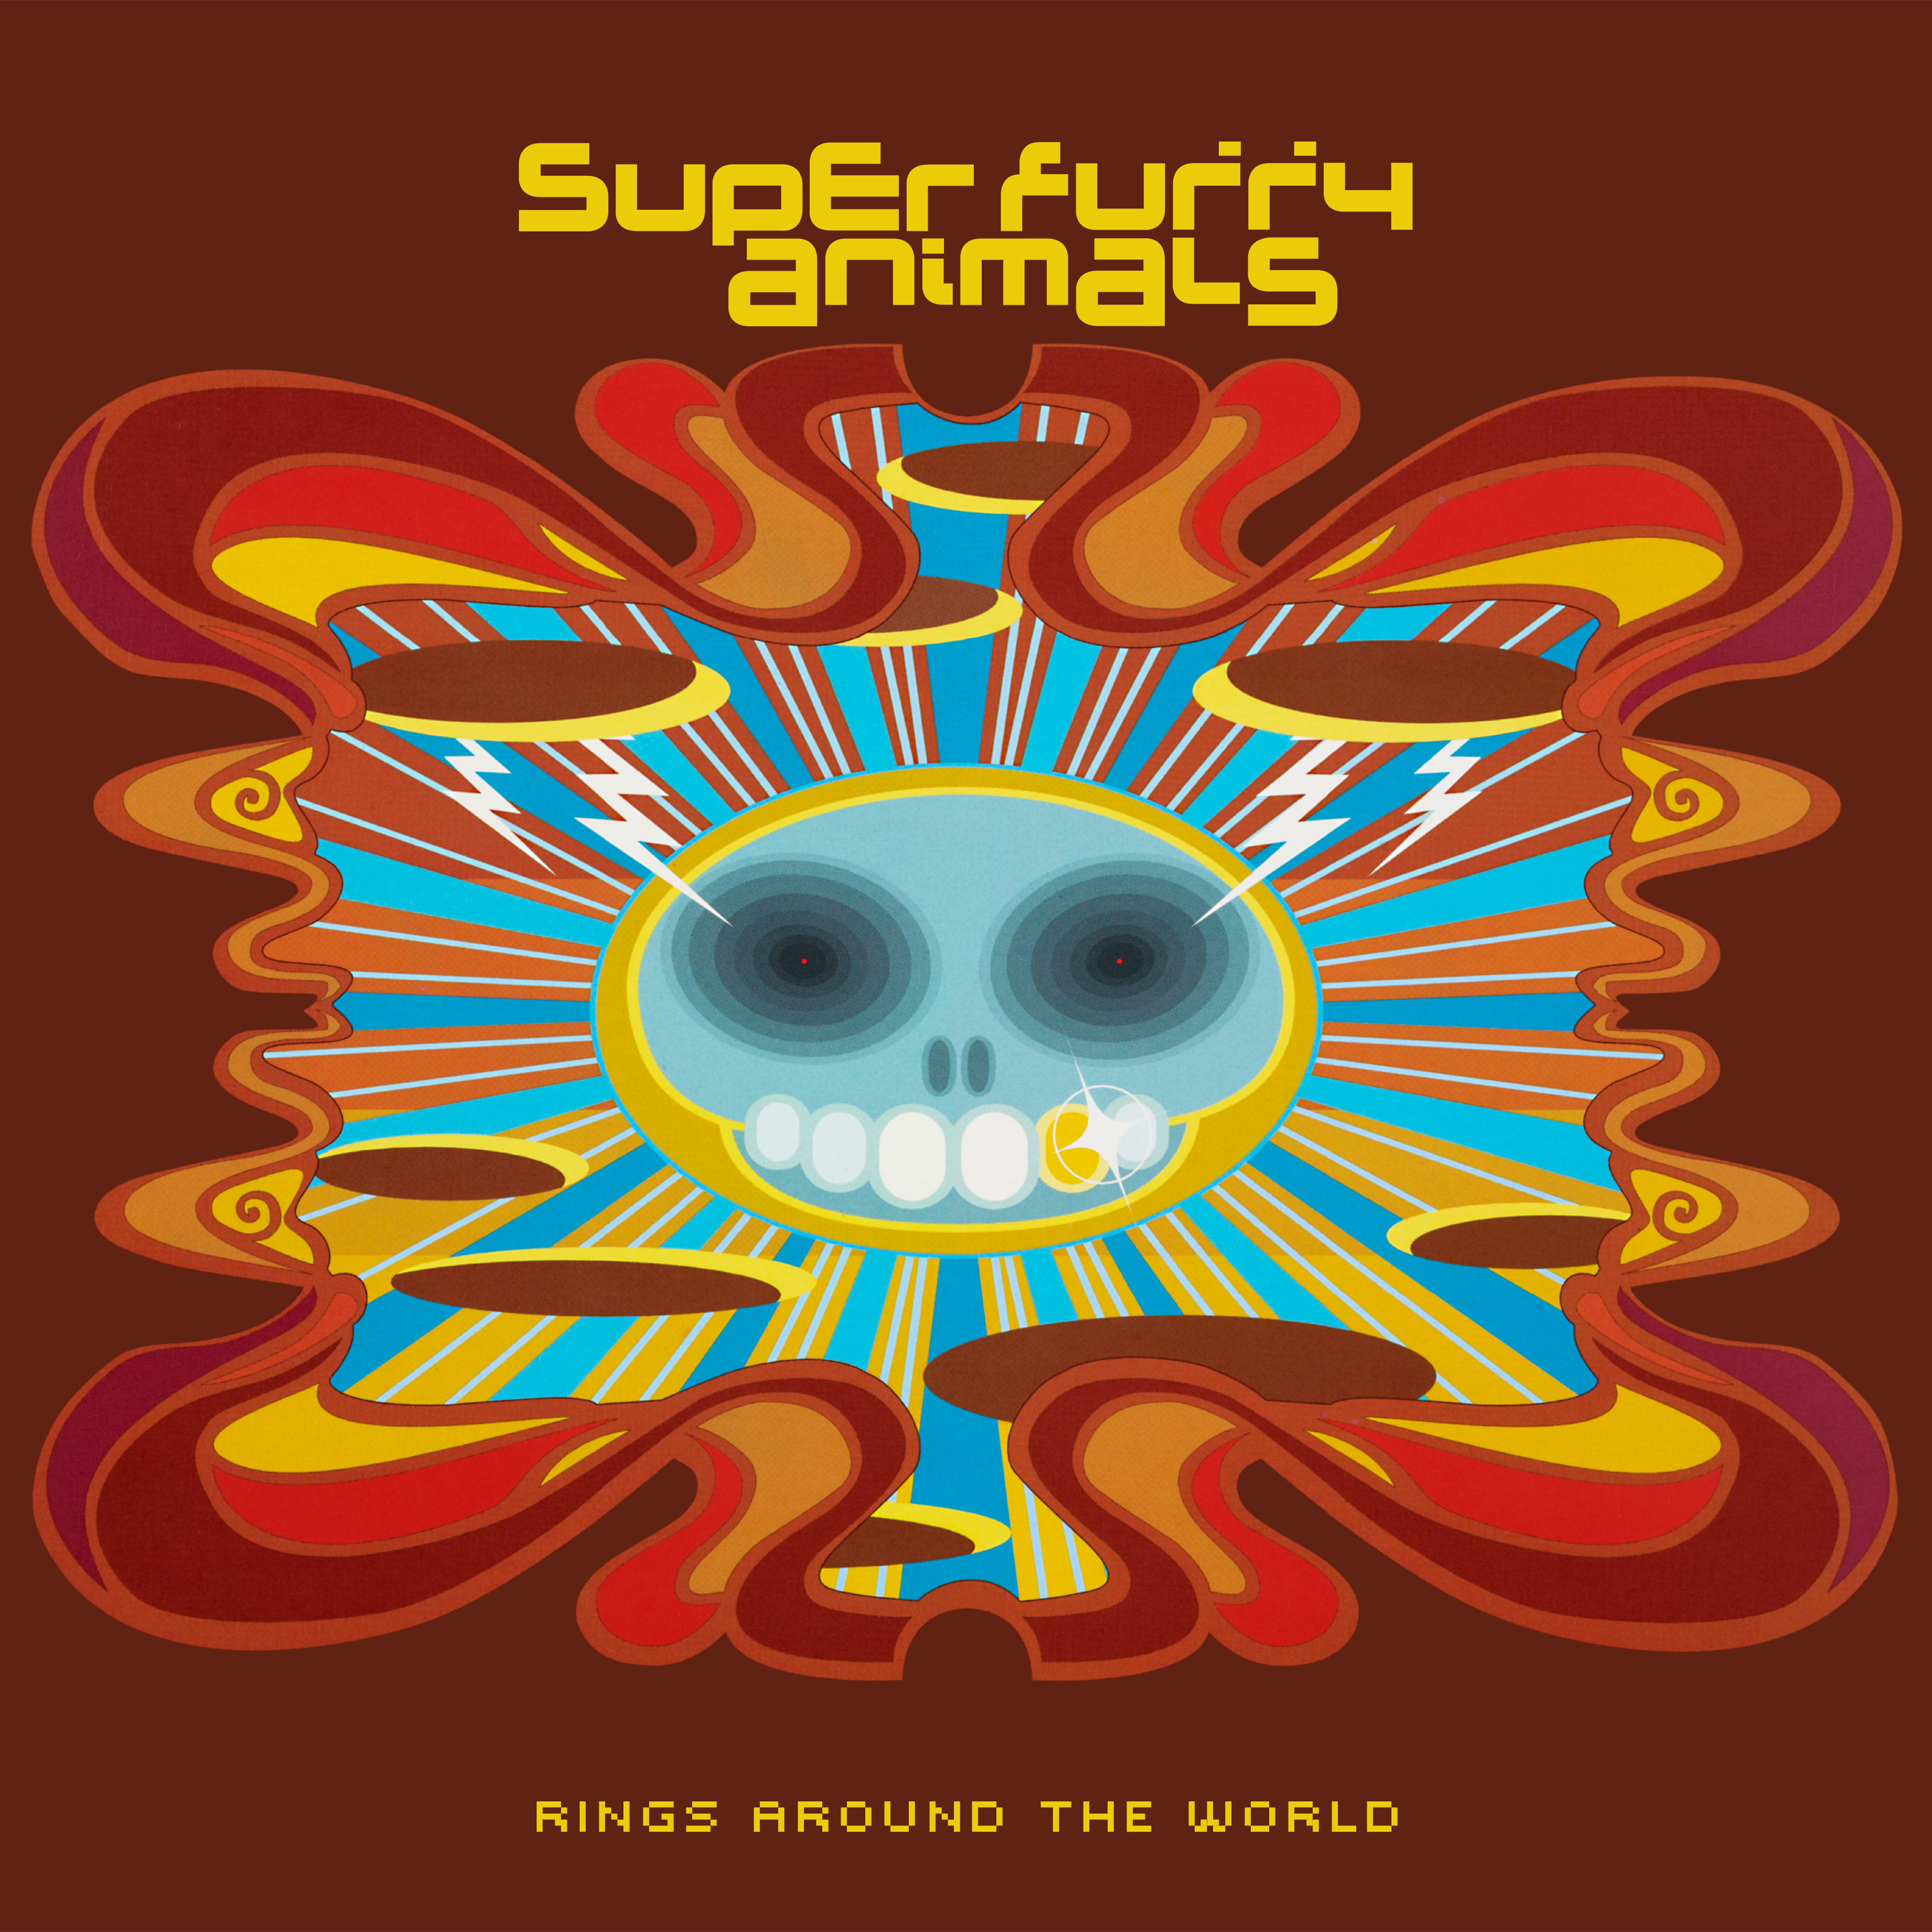 Super Furry Animals - Rings Around the World (20th Anniversary Edition Remastered) (2001/2021) [FLAC 24bit/96kHz]